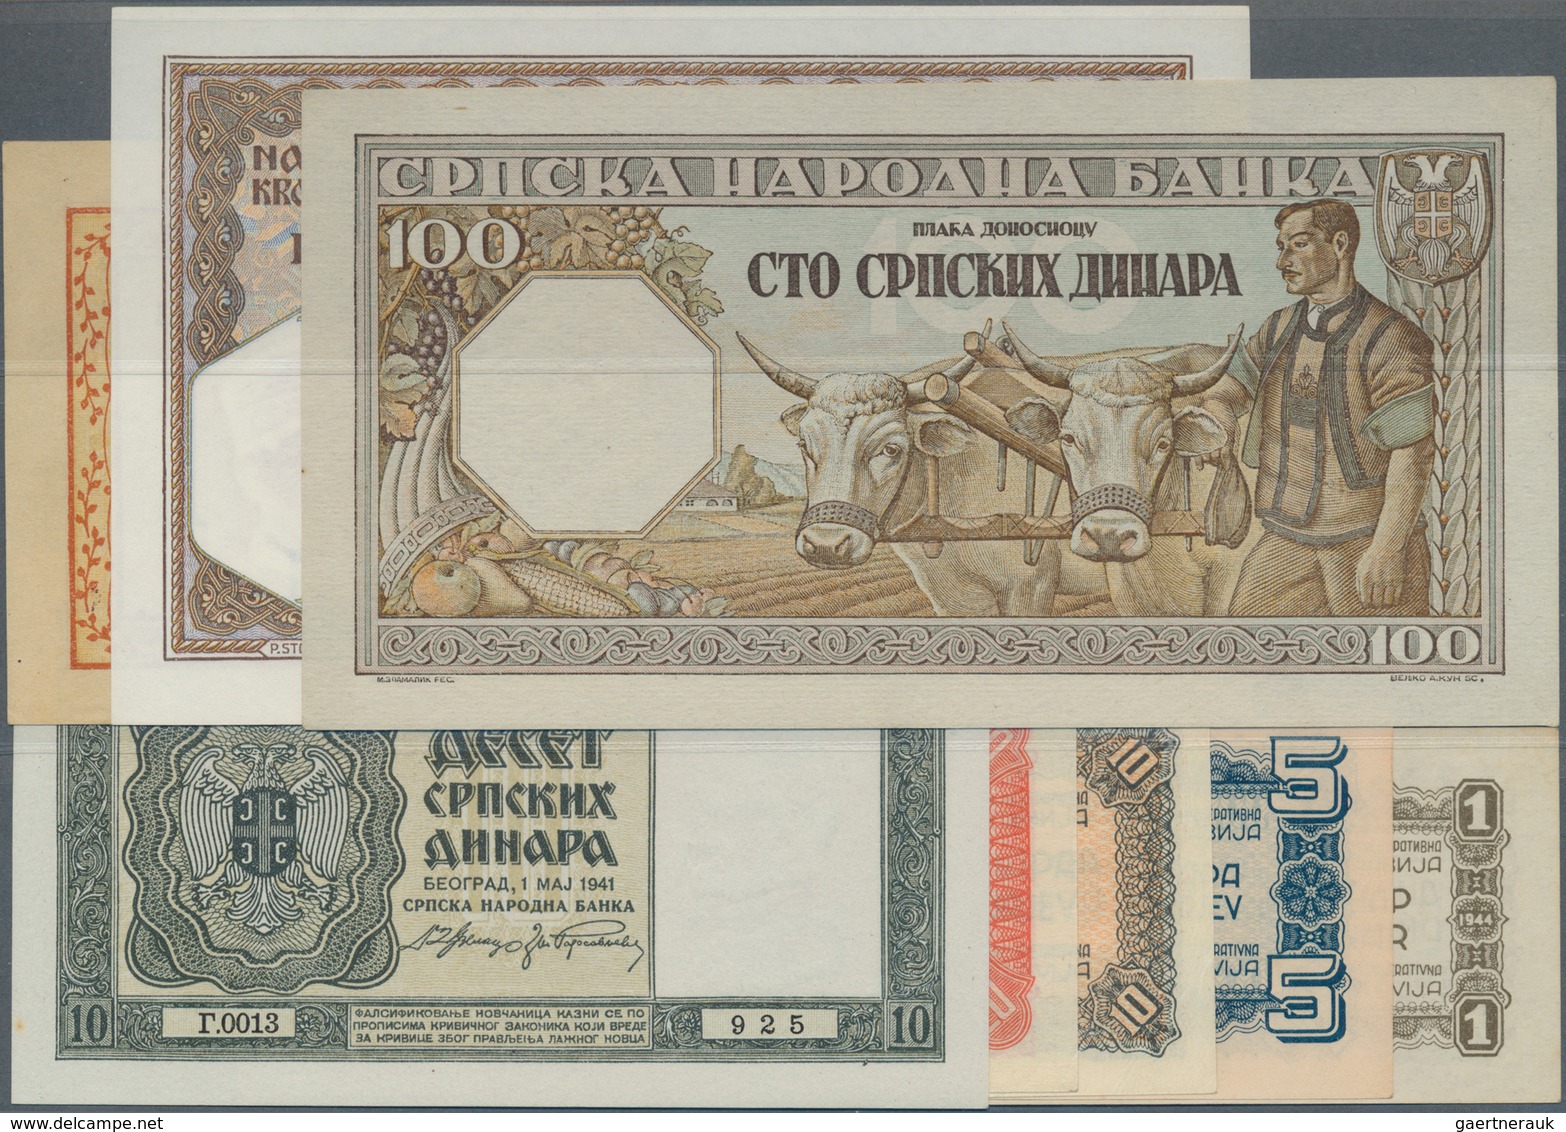 Yugoslavia / Jugoslavien: Set Of 11 Notes Containing The Following Notes: Croatia 1, 5, 10 & 20 Dina - Yugoslavia